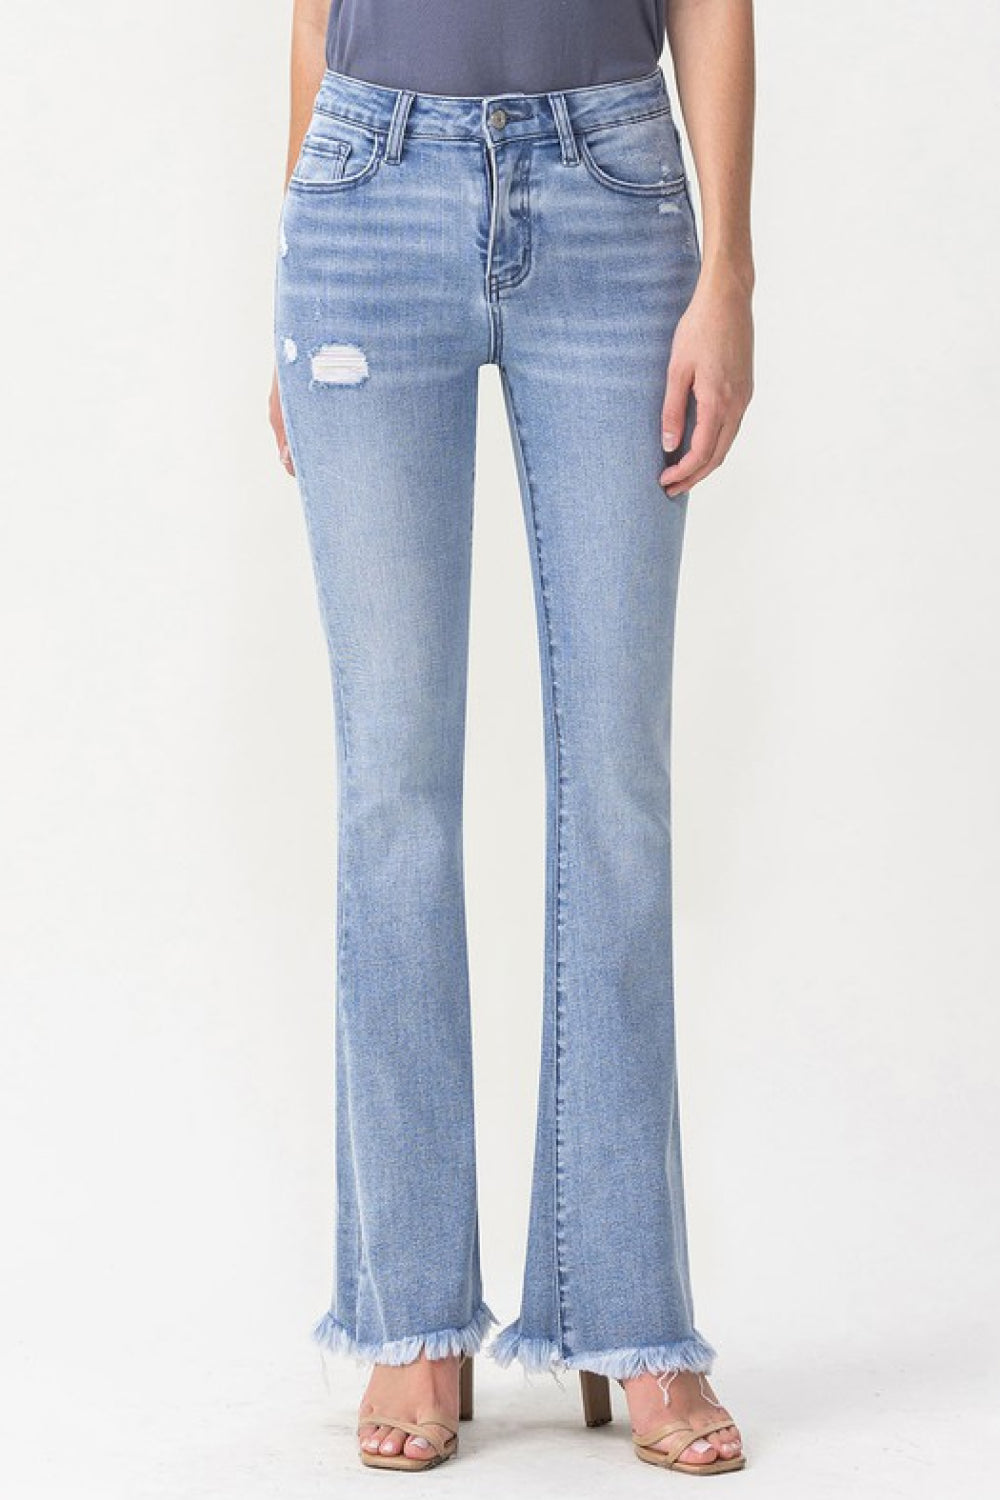 LOVERVET by Vervet High Rise Crop Straight Jeans